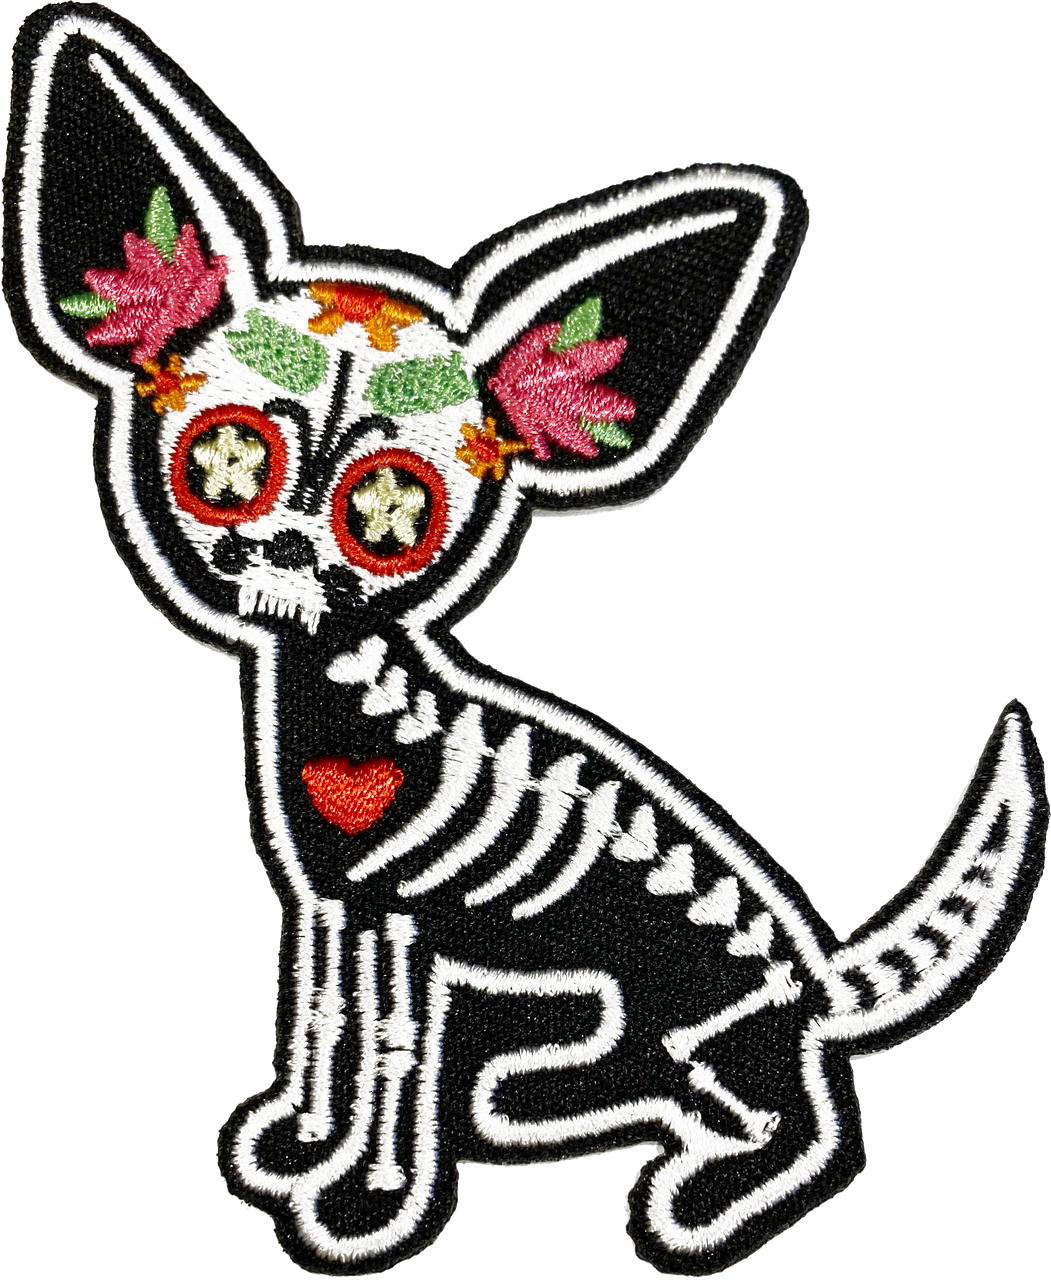 Chihuahua Sugar Skull - Patch